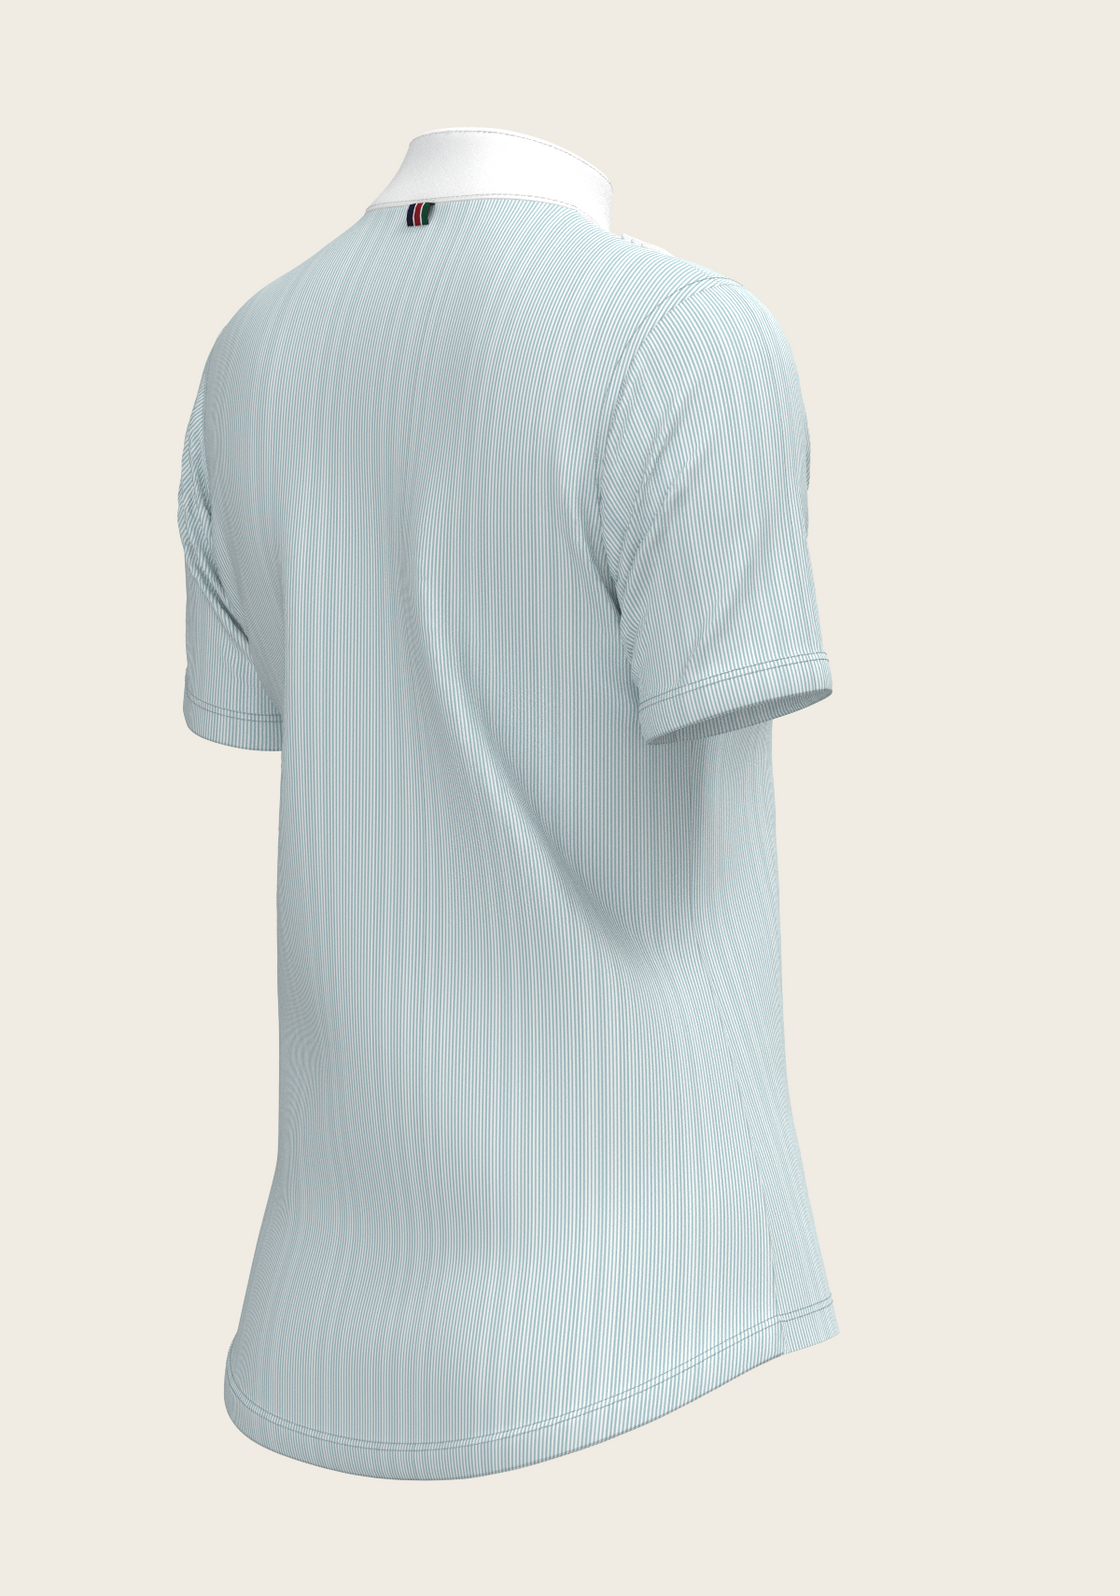  Stripes in Sky Blue Short Pleated Short Sleeve Show Shirt